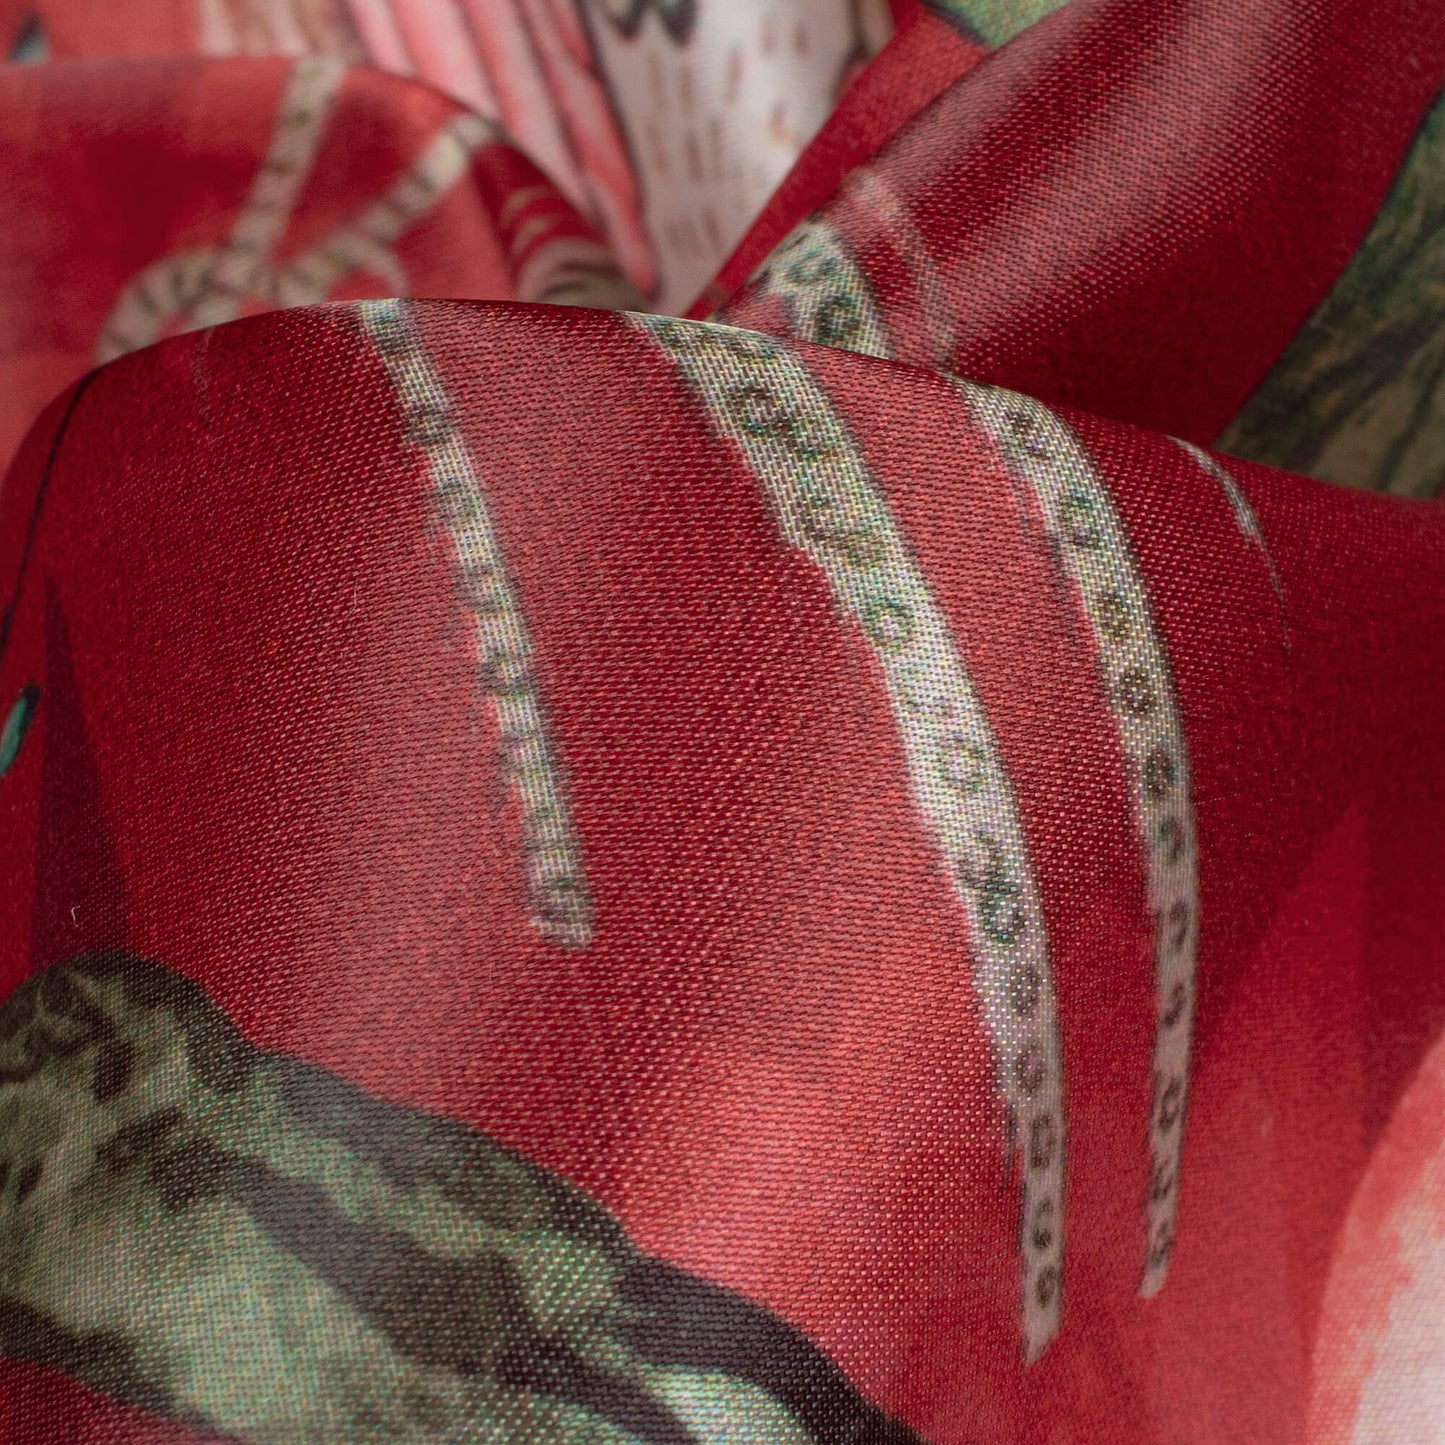 Sangria Red And Salmon Pink Floral Pattern Digital Print Organza Satin Fabric